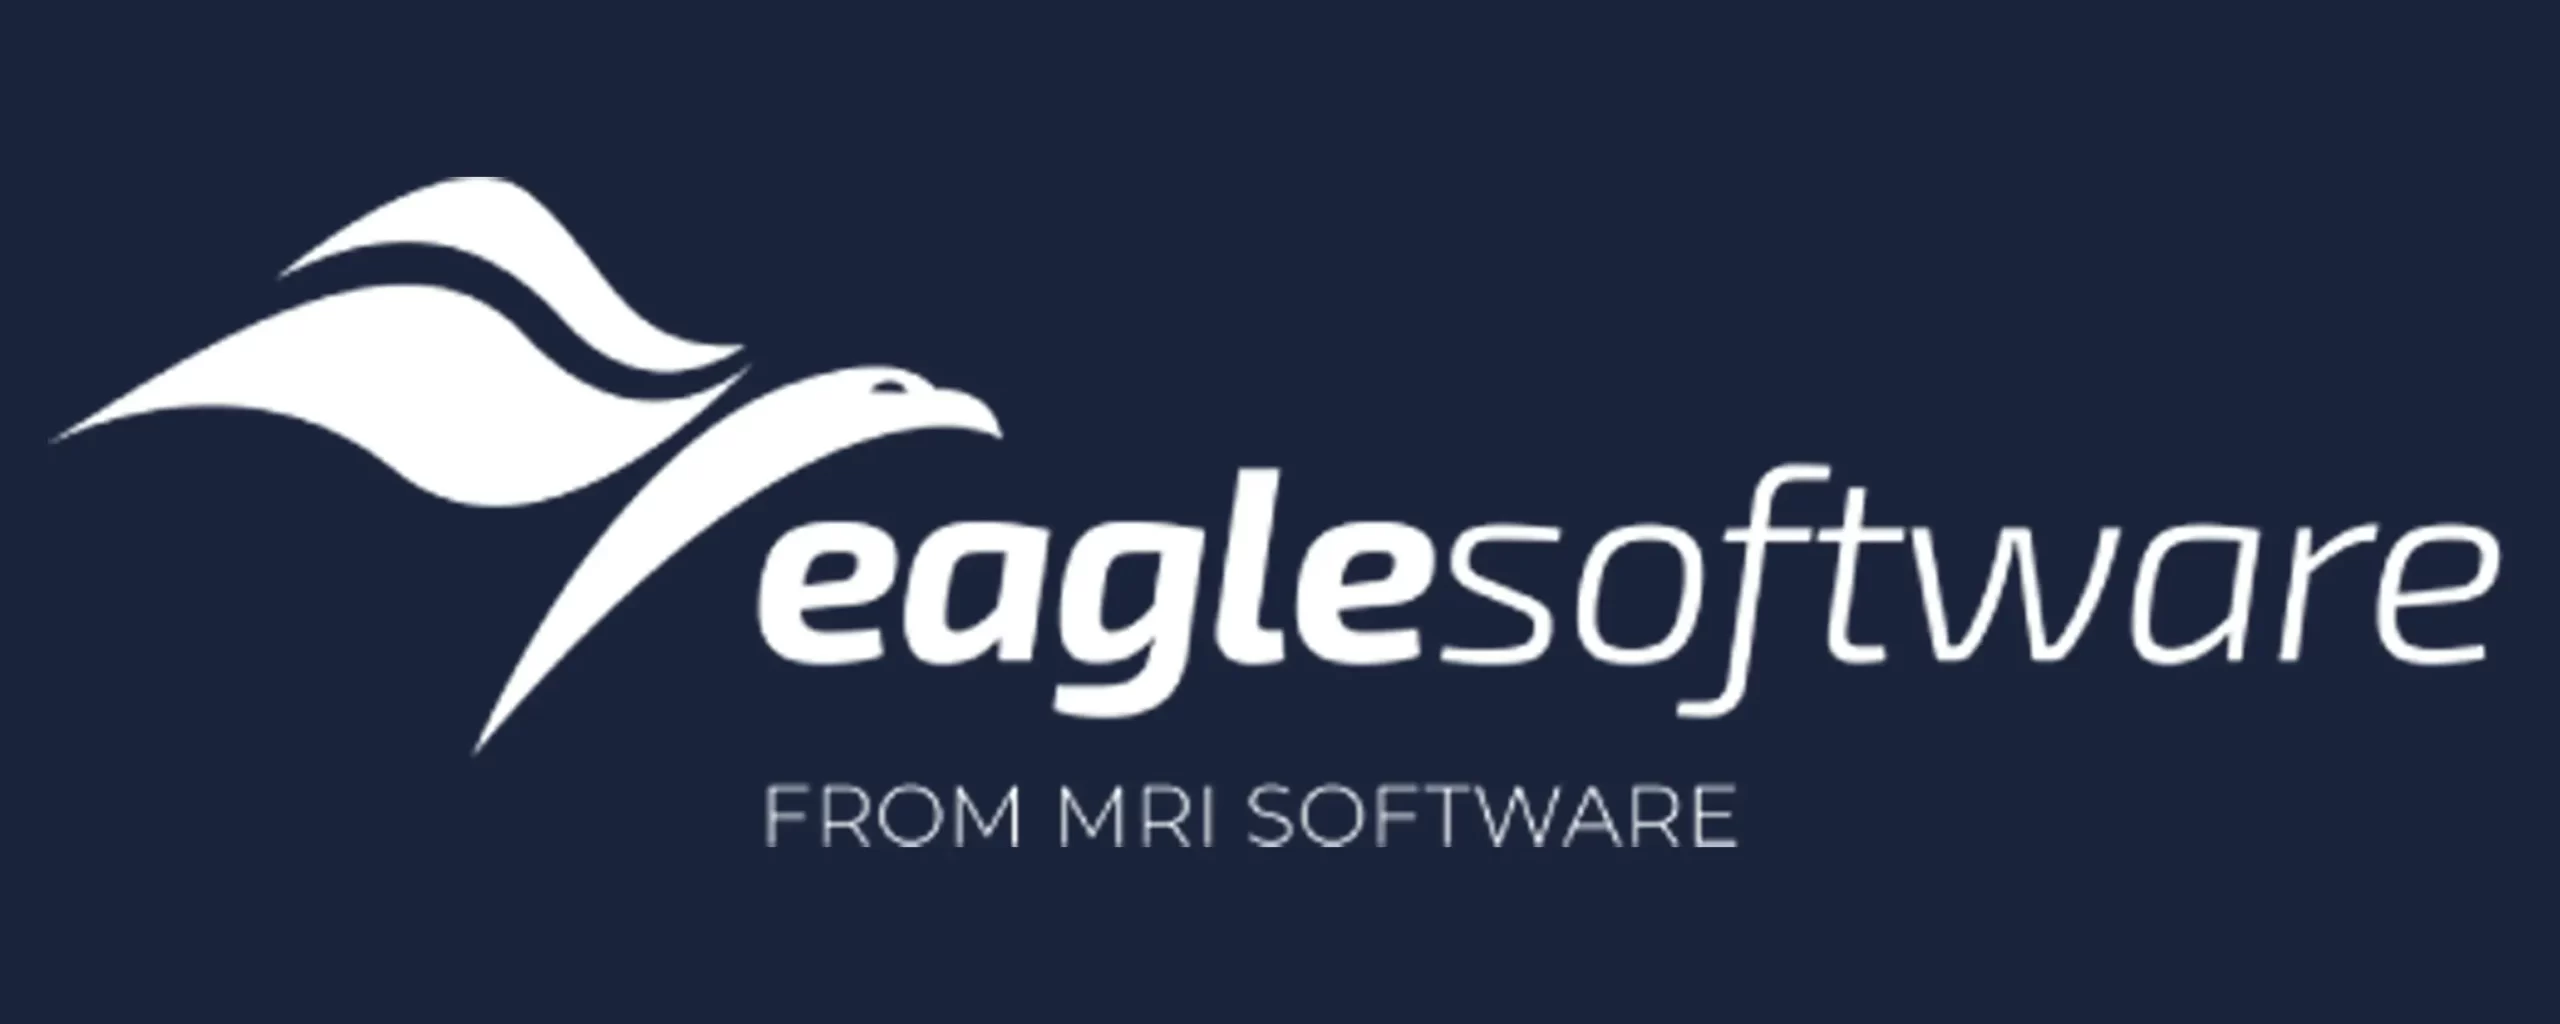 eagle software